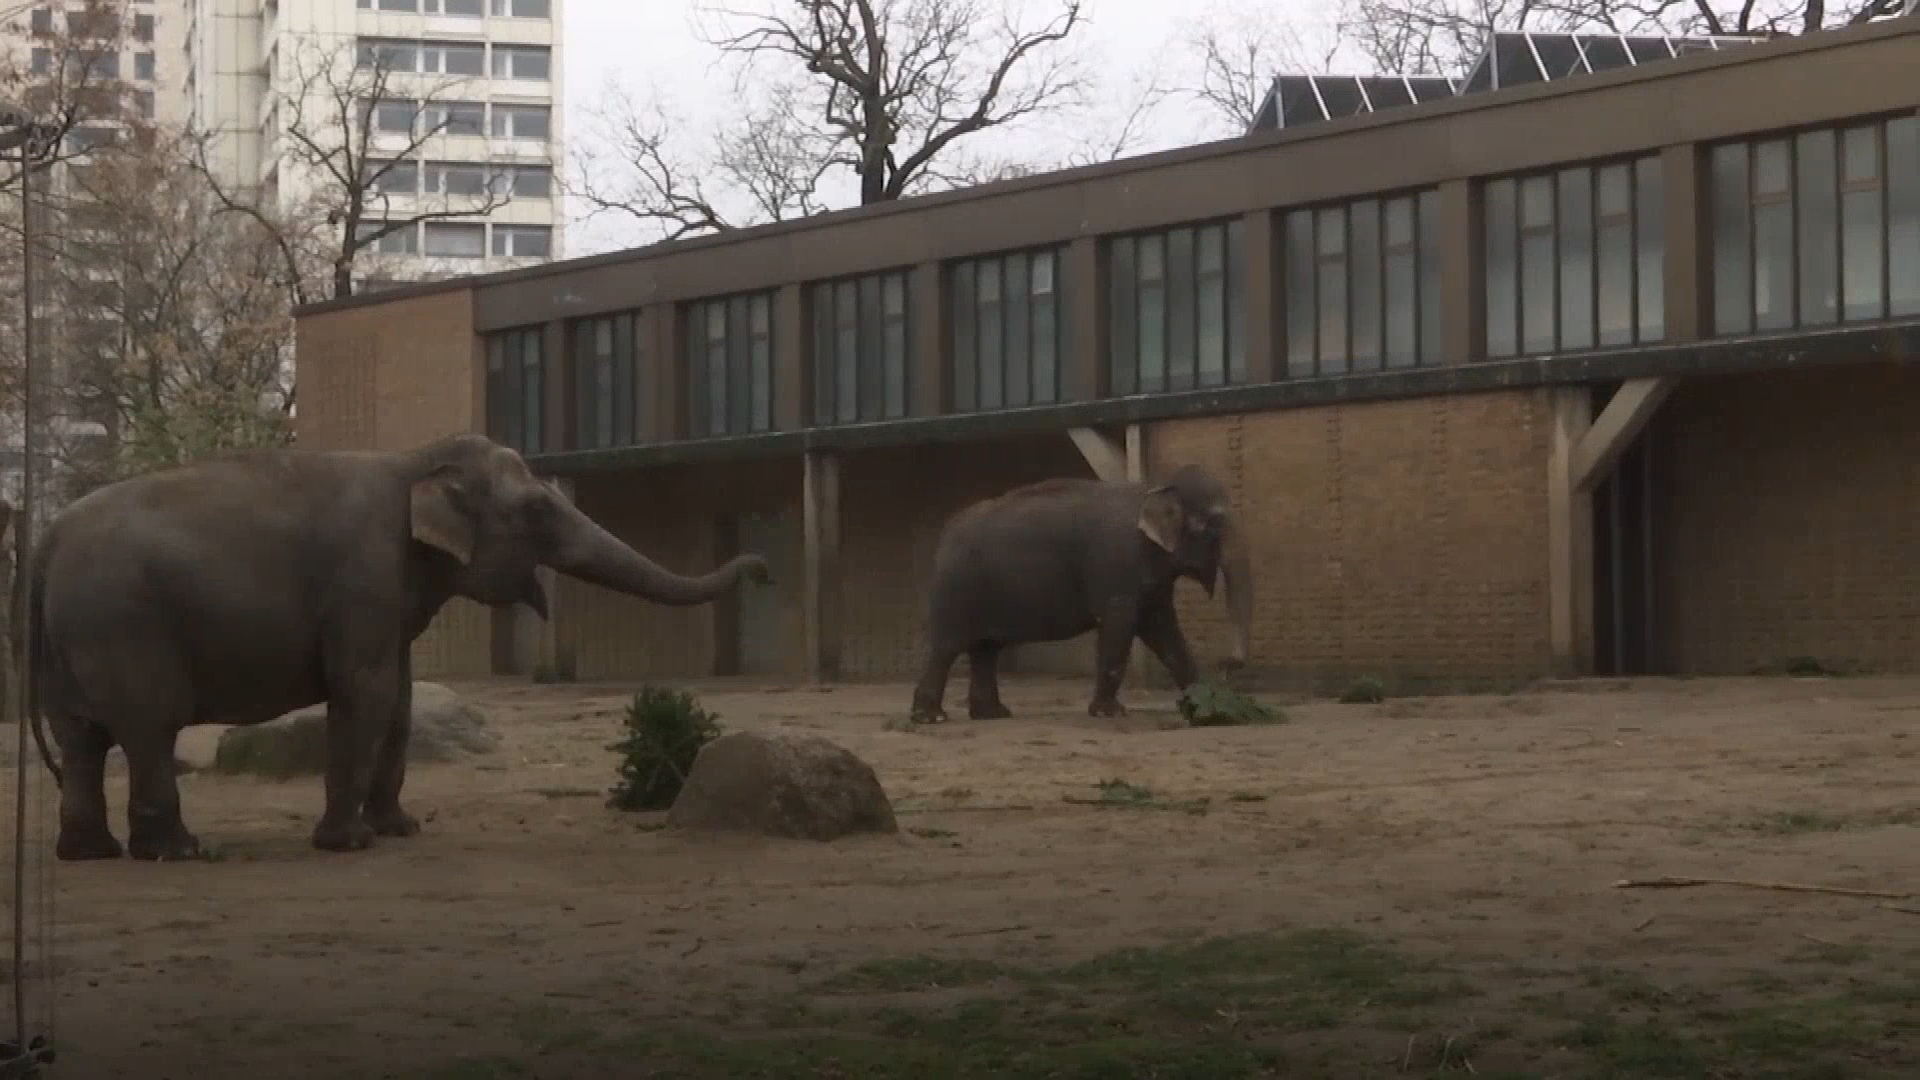 Elephants and Christmas trees at Zoo Tiergarten in Berlin